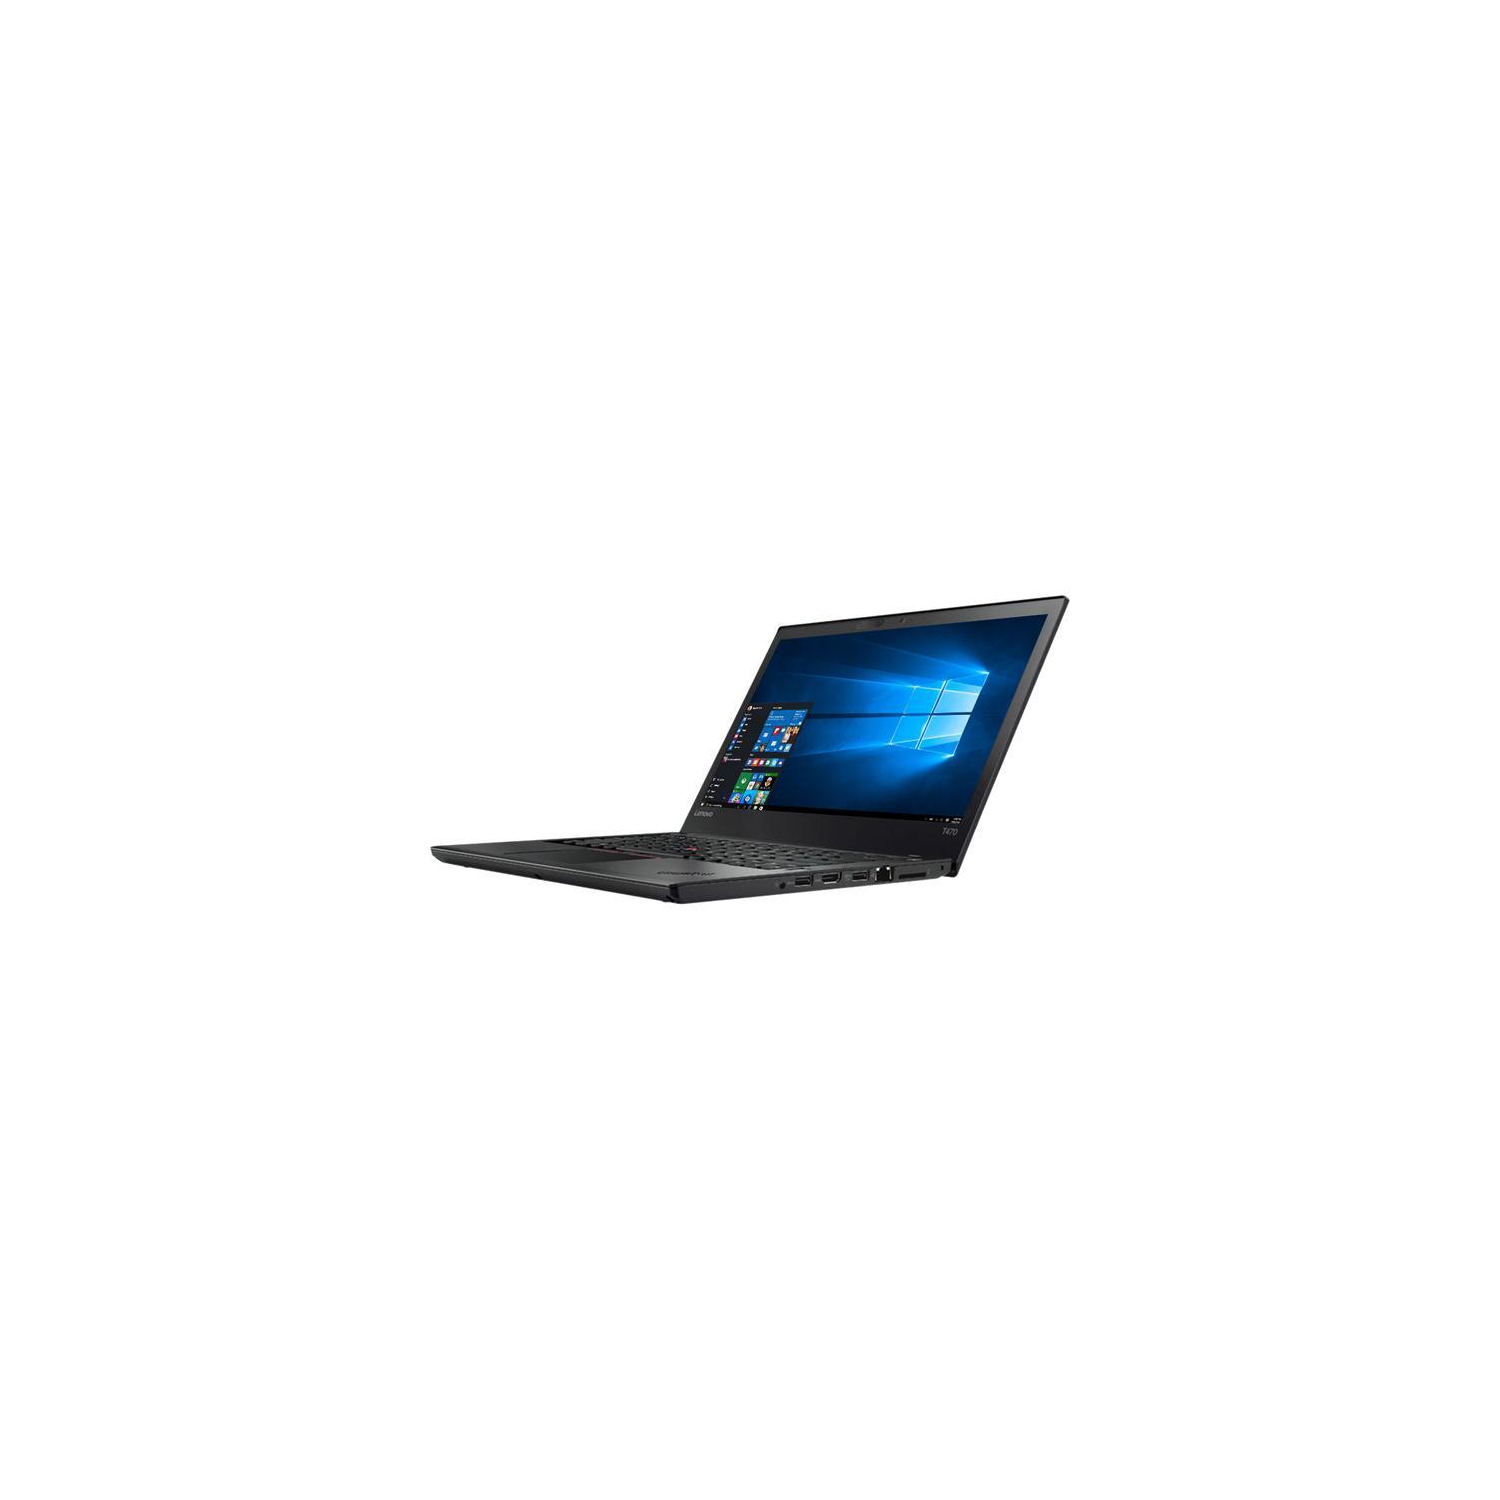 Refurbished (Good) - Lenovo ThinkPad T470 14" Laptop - Intel Core i5-6300U, 256GB SSD, 8GB RAM - Windows 10 Pro